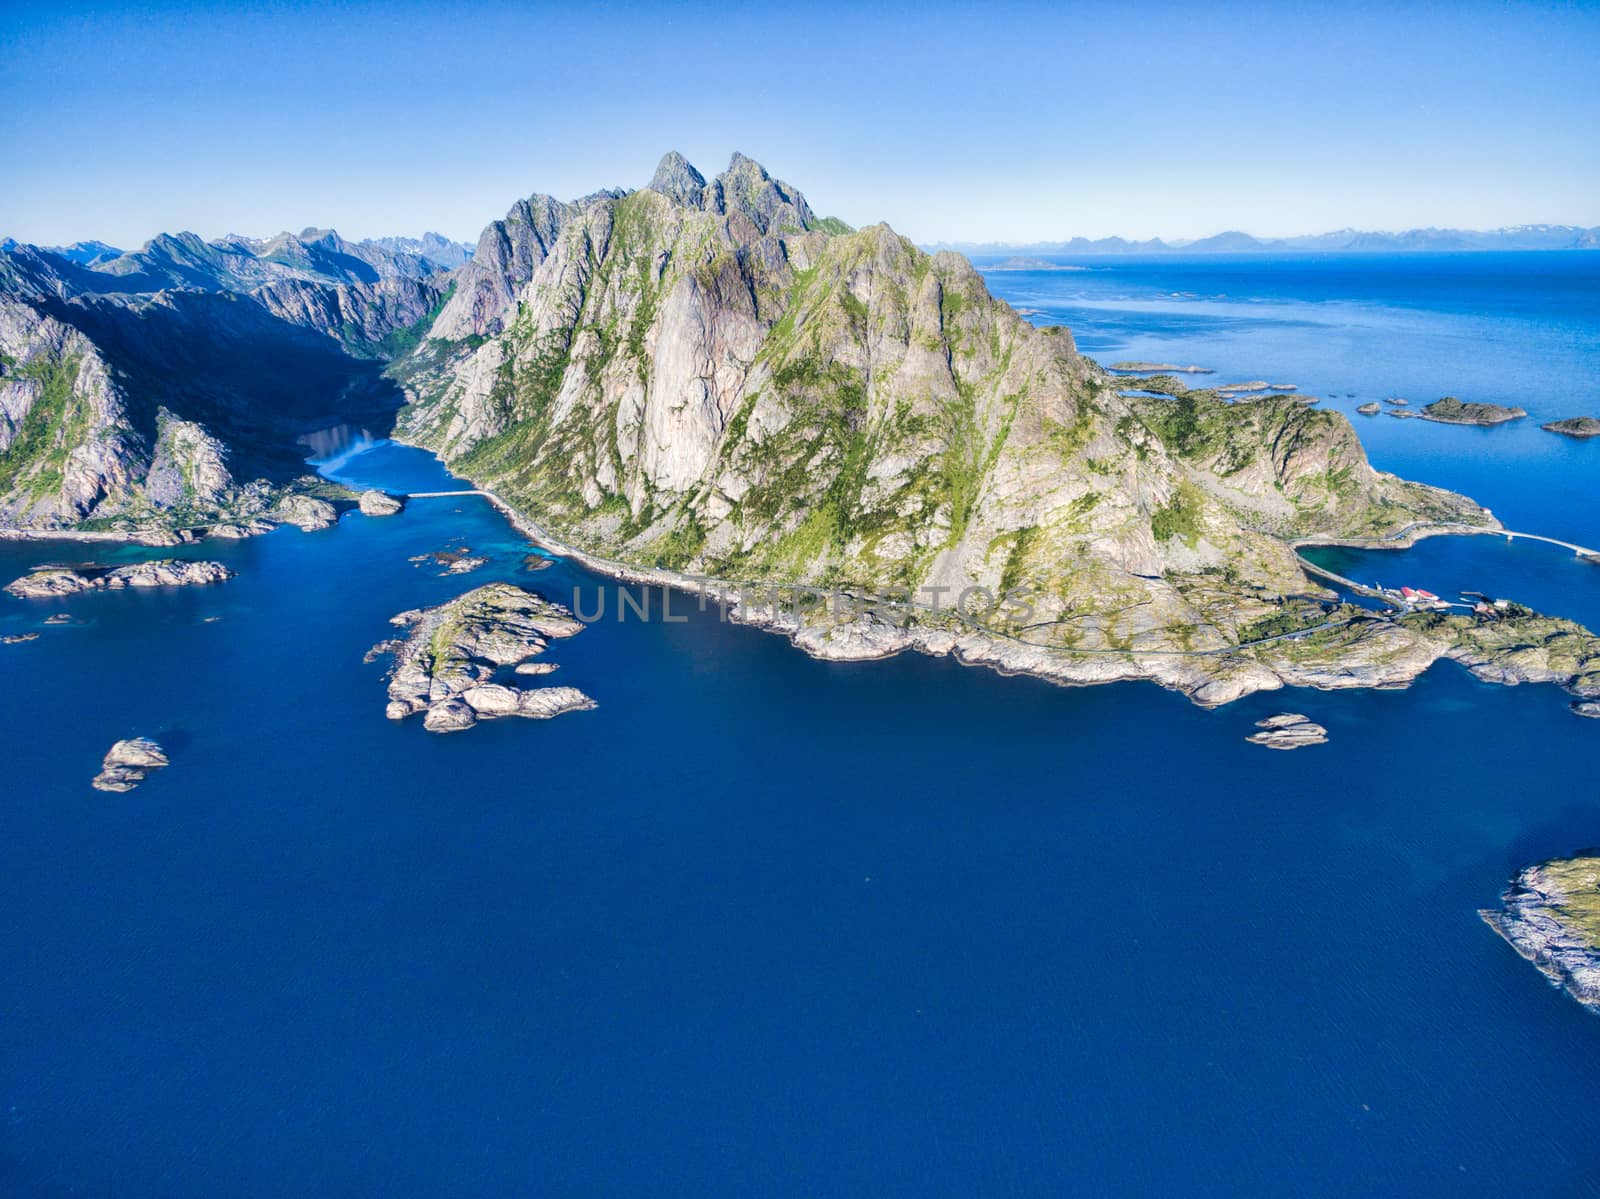 Magnificient peaks on Lofoten islands in Norway, popular climbing spot